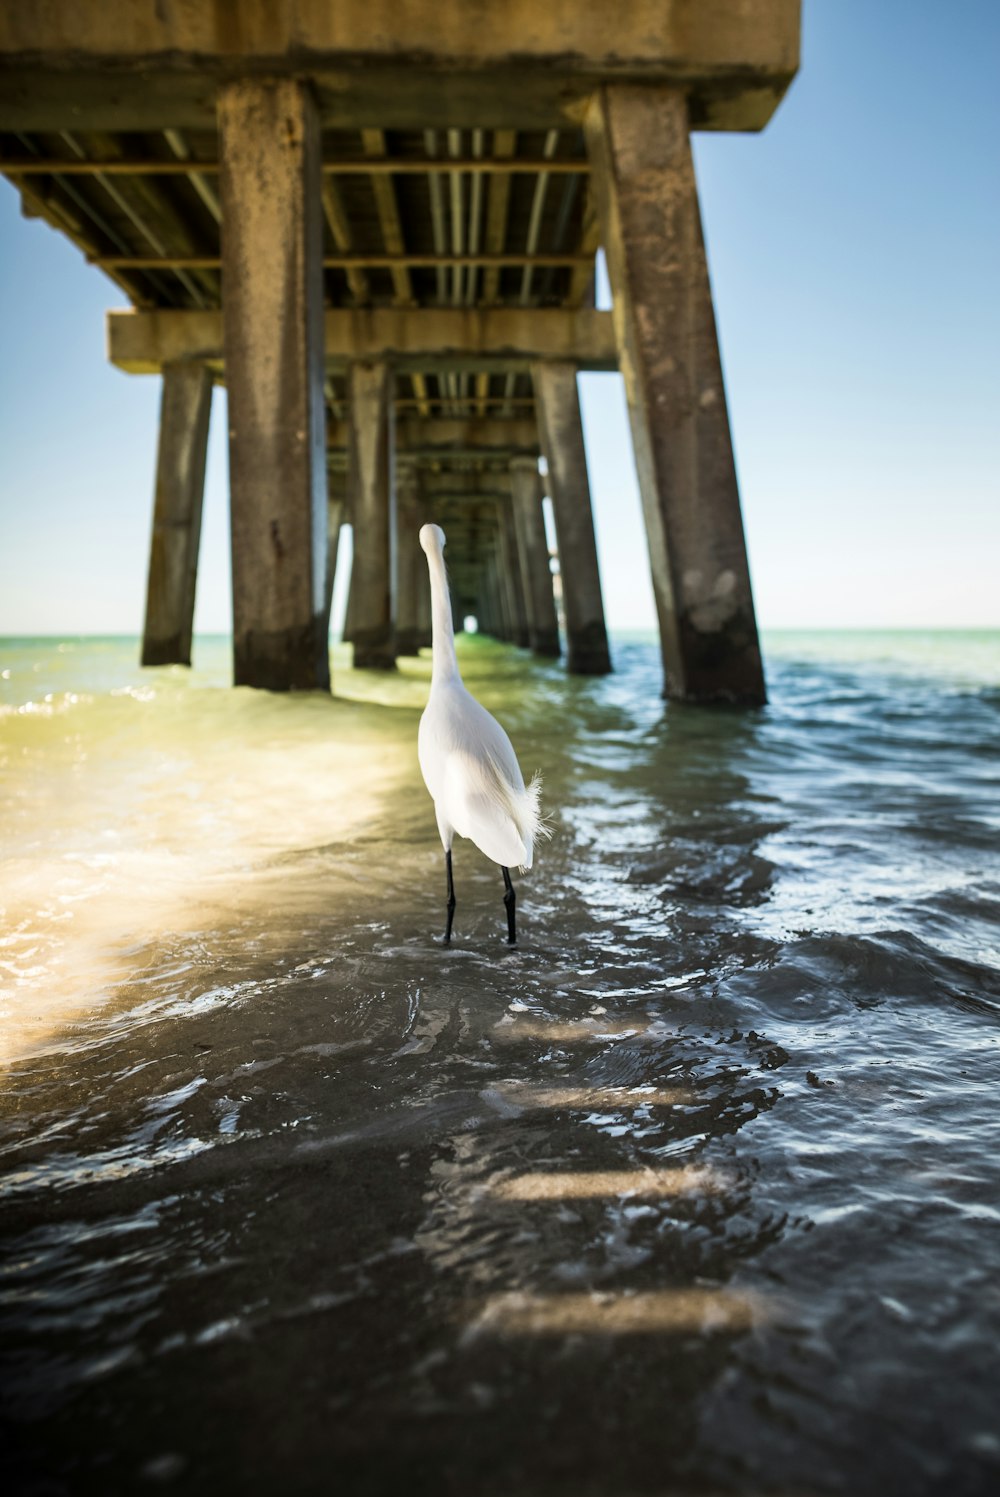 white bird standing on body of water under brown wooden port